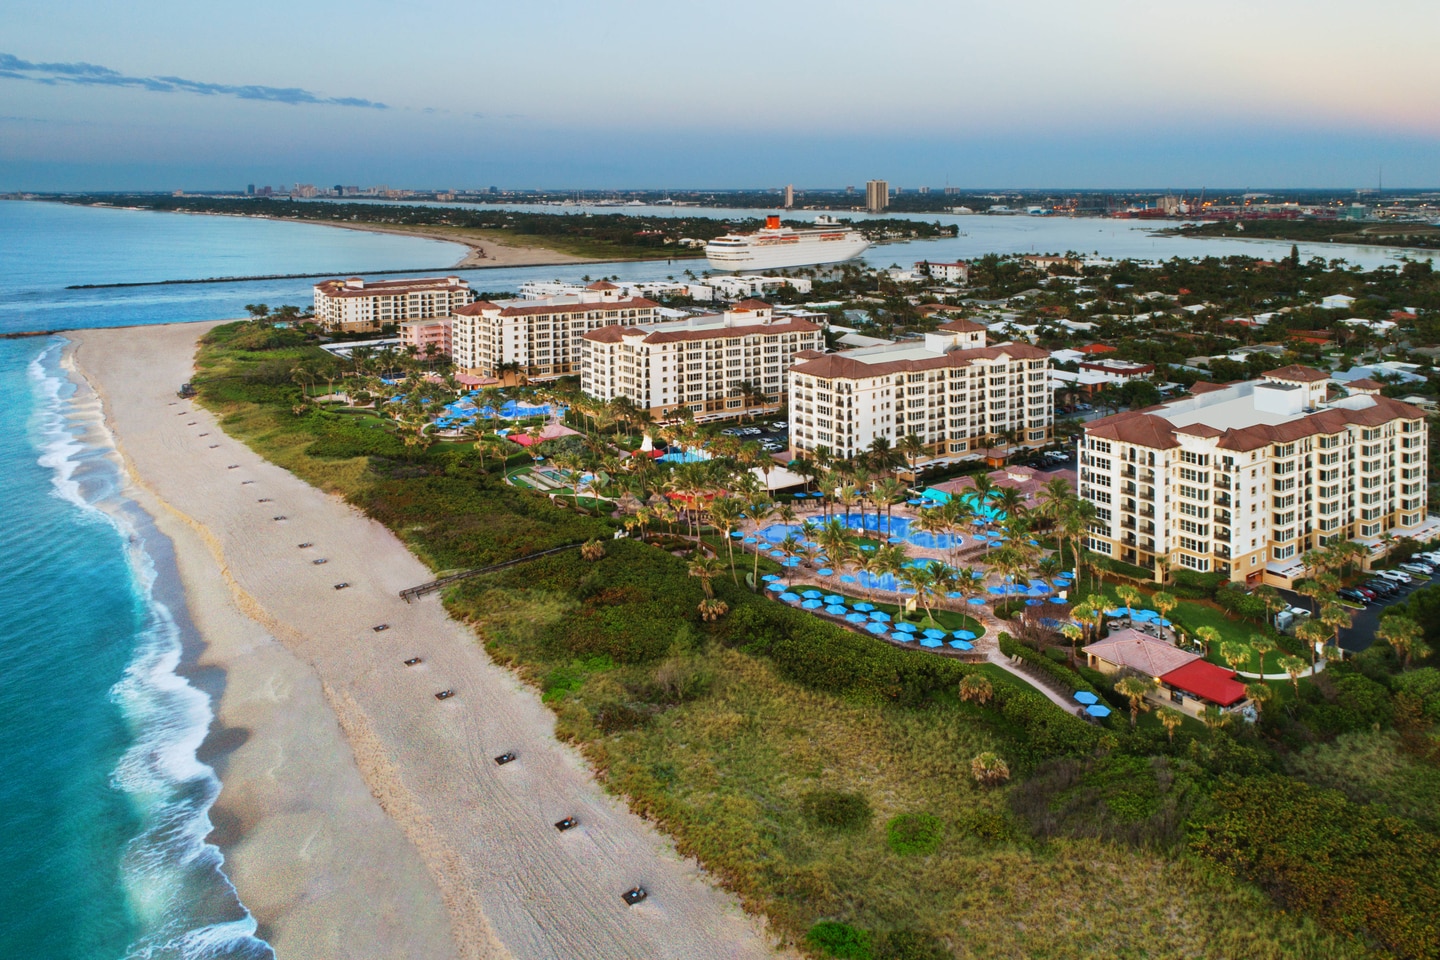 Best Marriott Beach Hotels & Resorts in Florida For Your Marriott Free Night Certificates